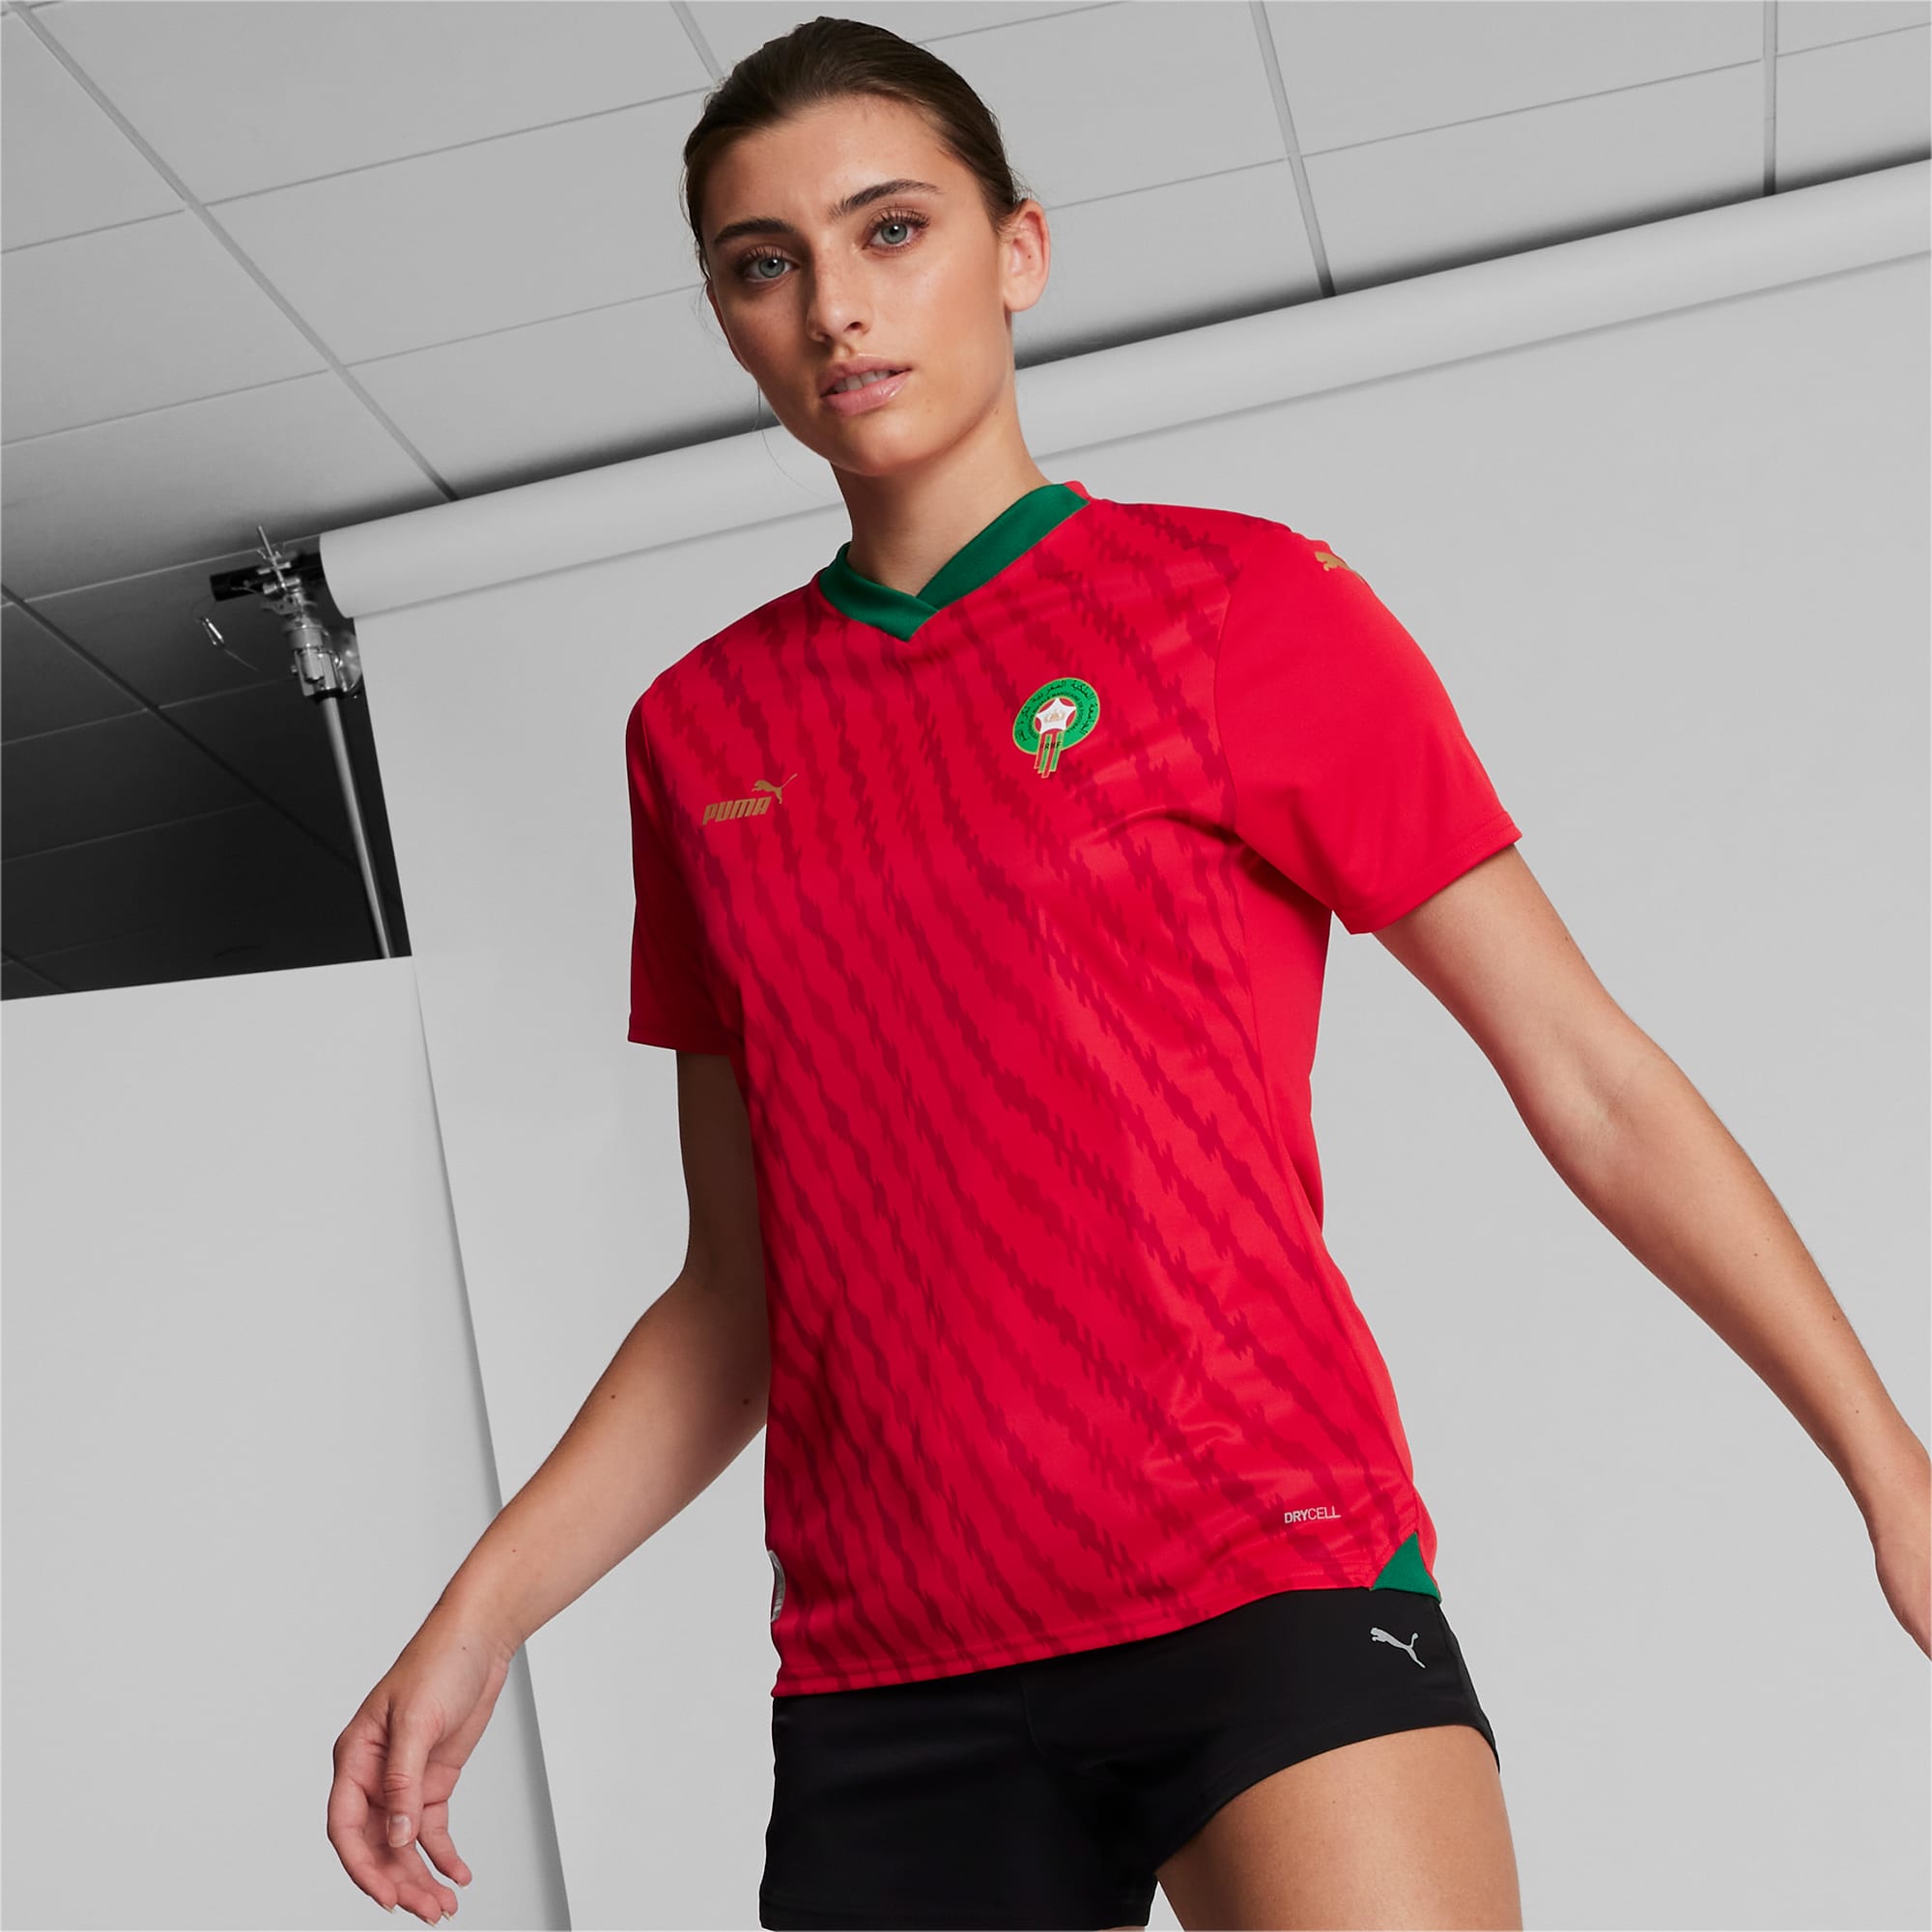 adidas Belgium 22 Home Jersey - Red, Women's Soccer